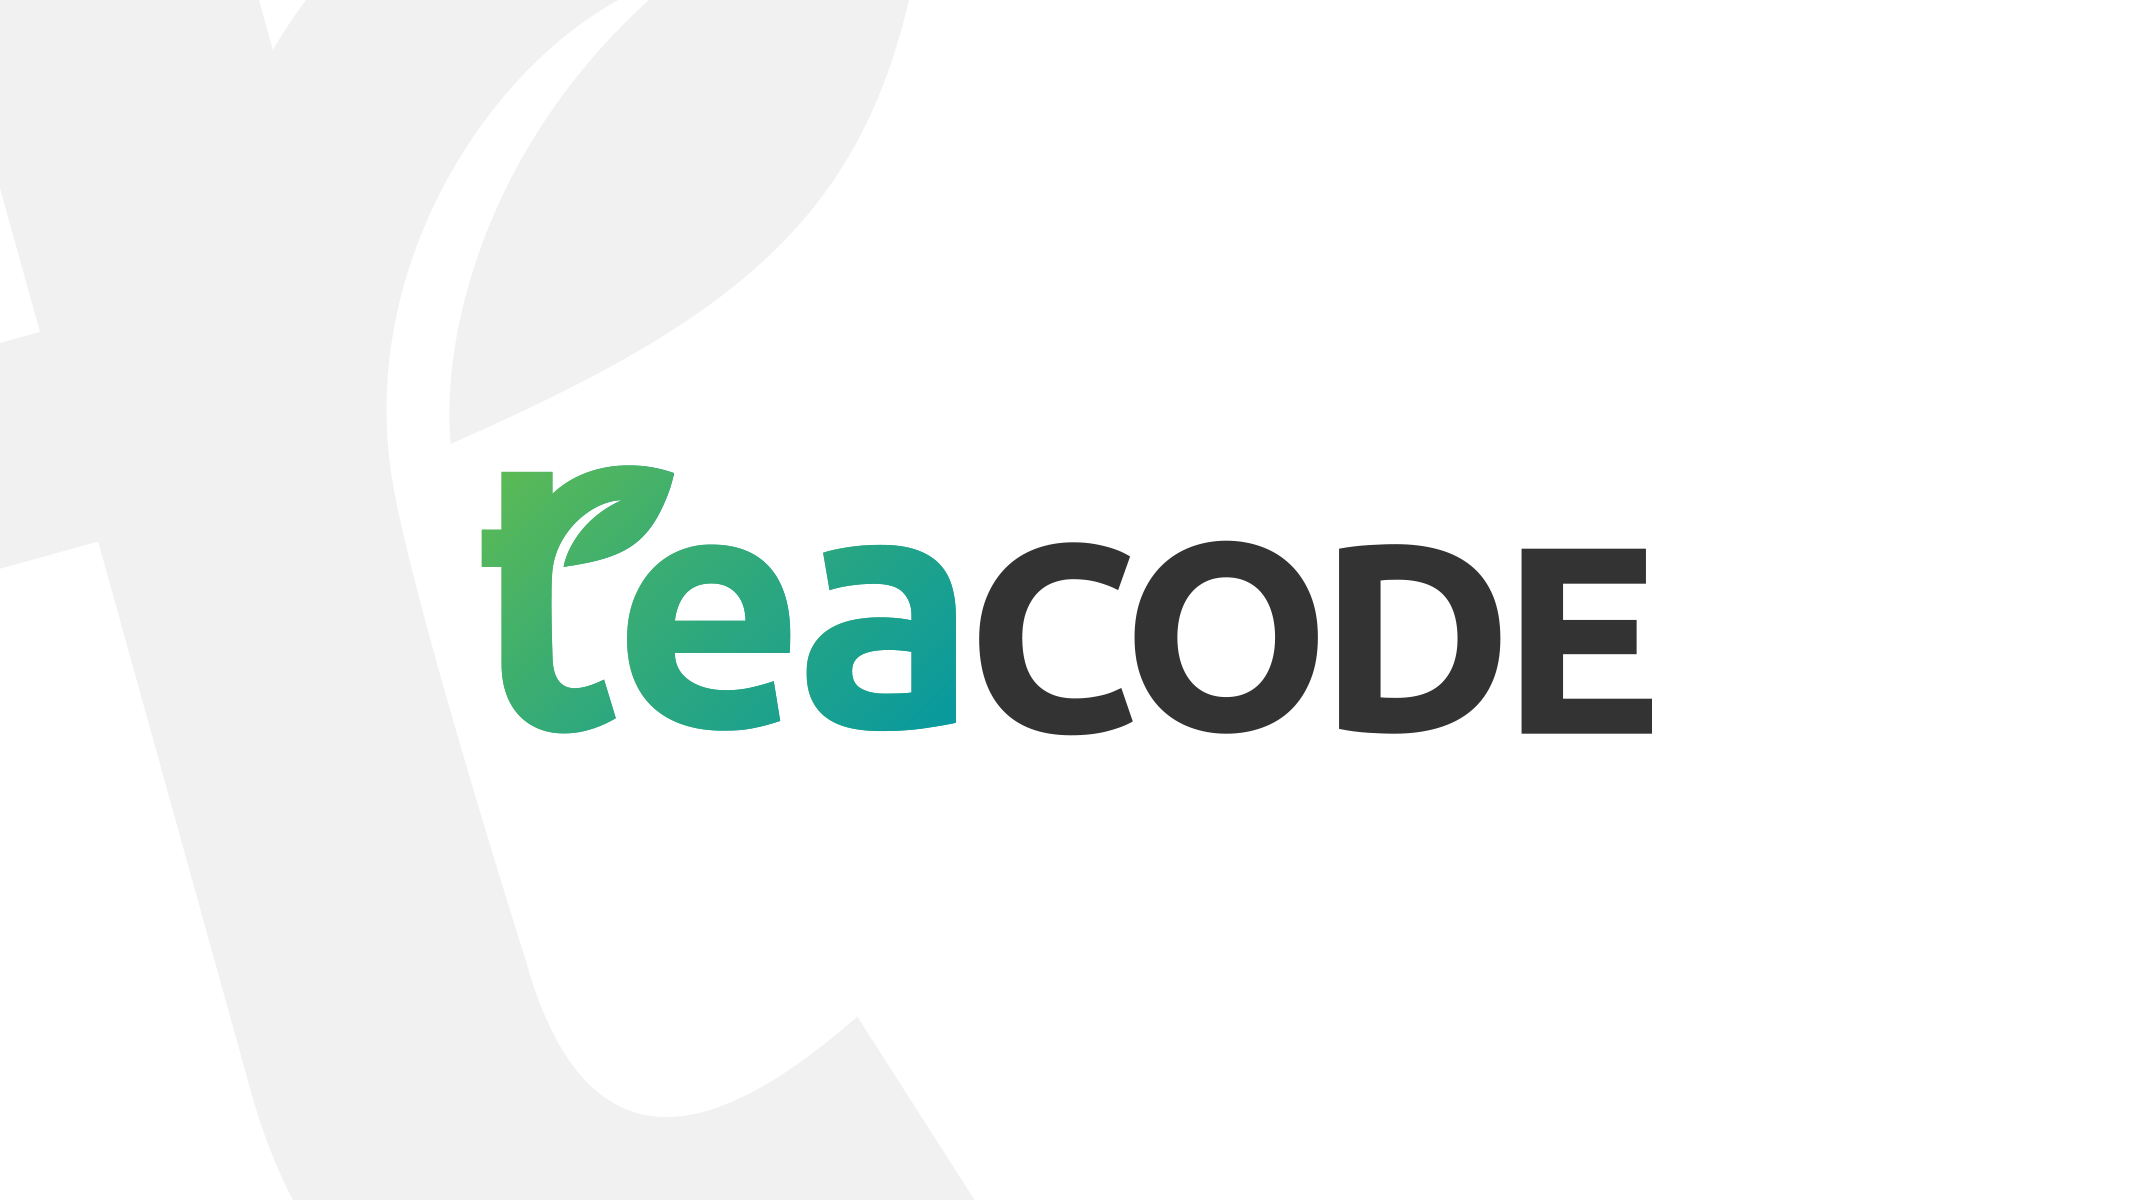 teacode python